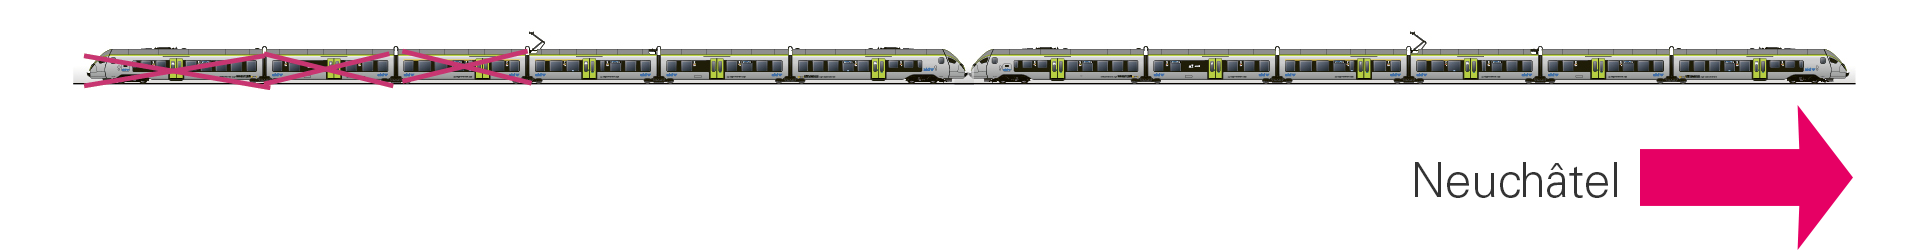 IR66 Neuchatel–La Chaux-de-Fonds - Lange Züge – kurze Perrons